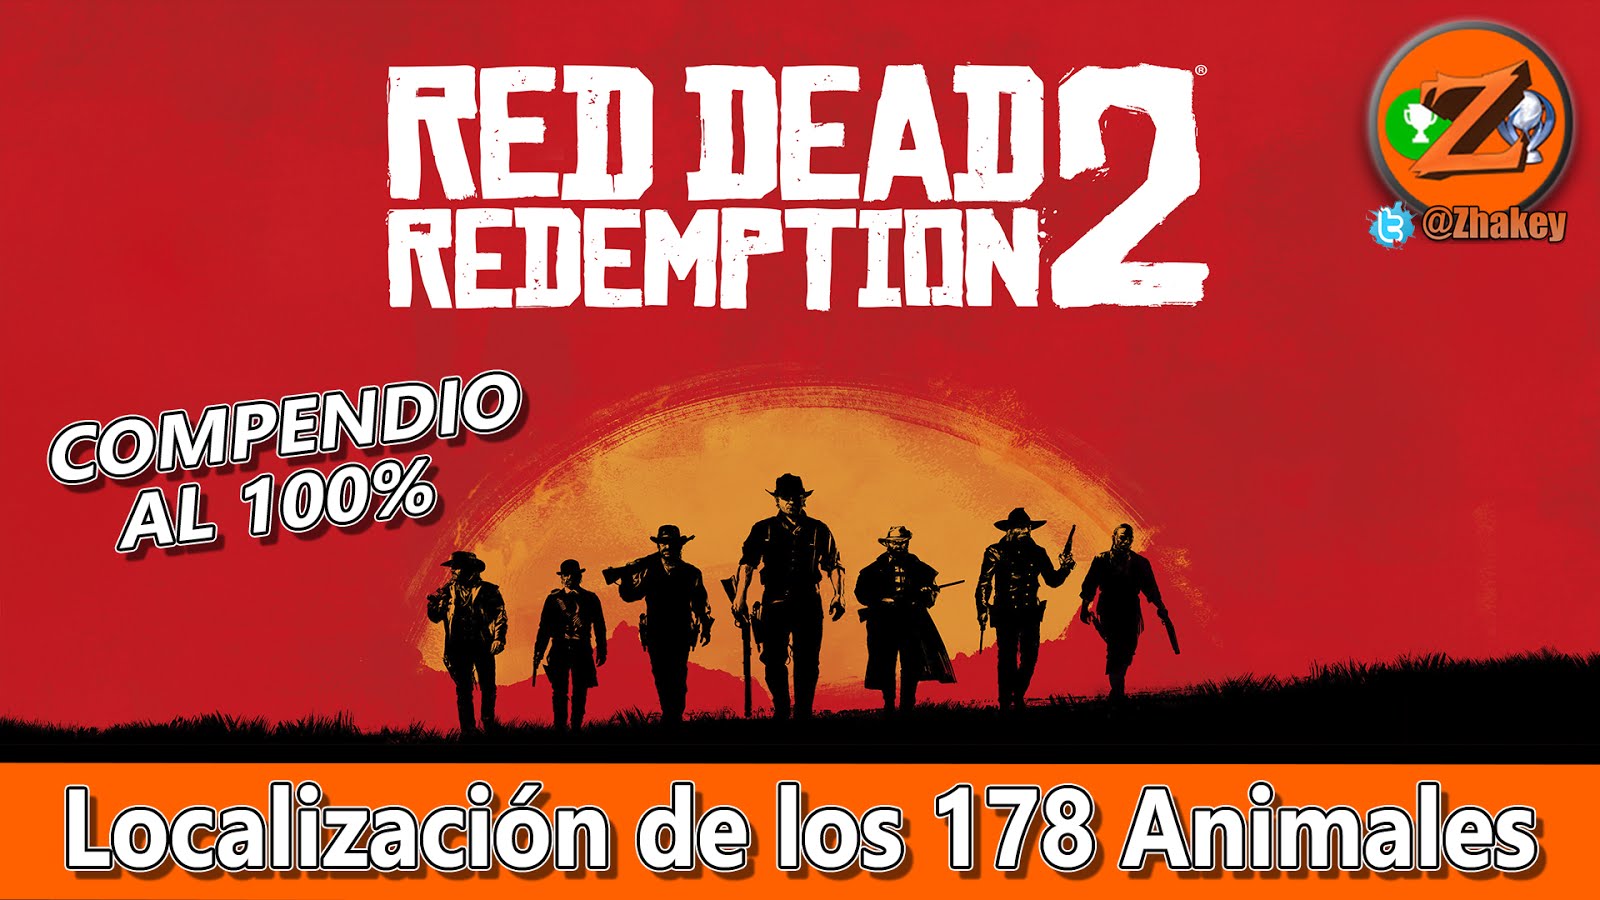 inteligente Experto fragmento Zhakey: Compendio Completo de Animales de Red Dead Redemption 2